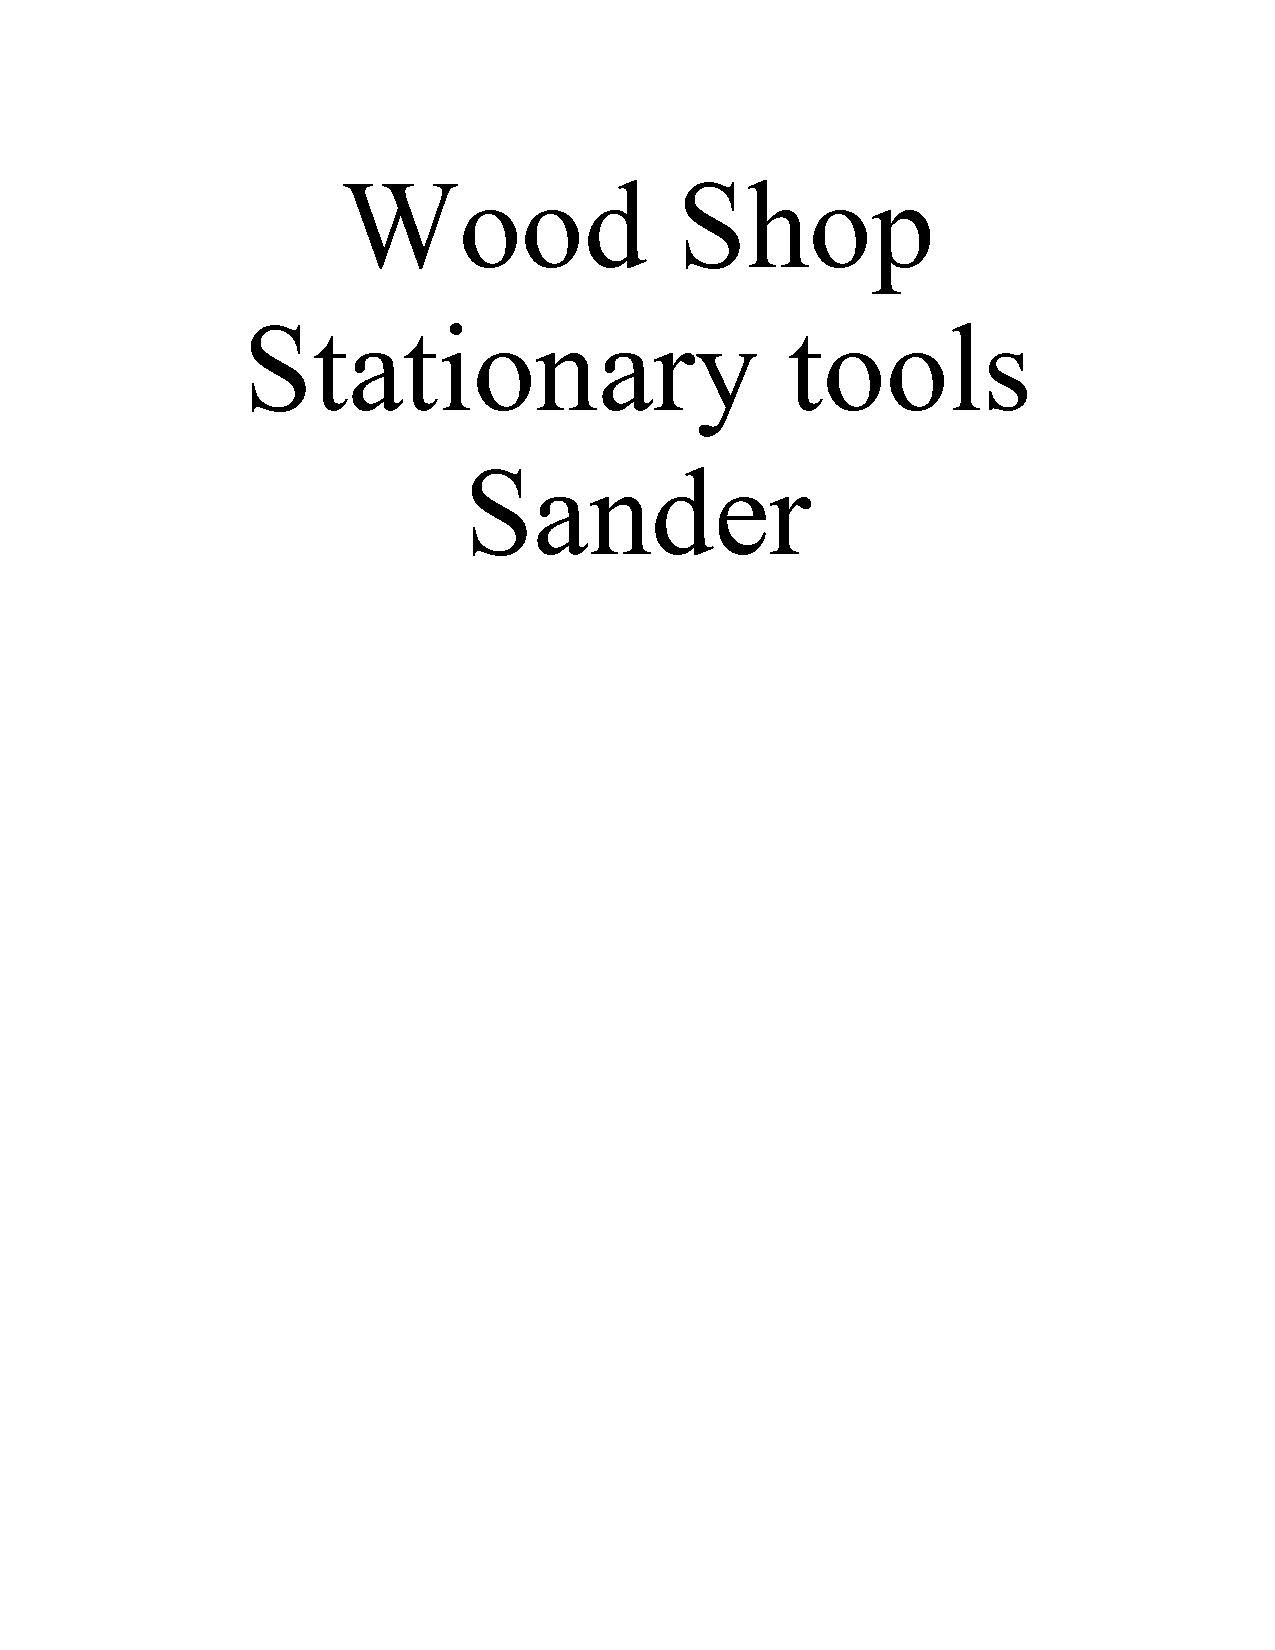 Wood Stationary Sander.pdf